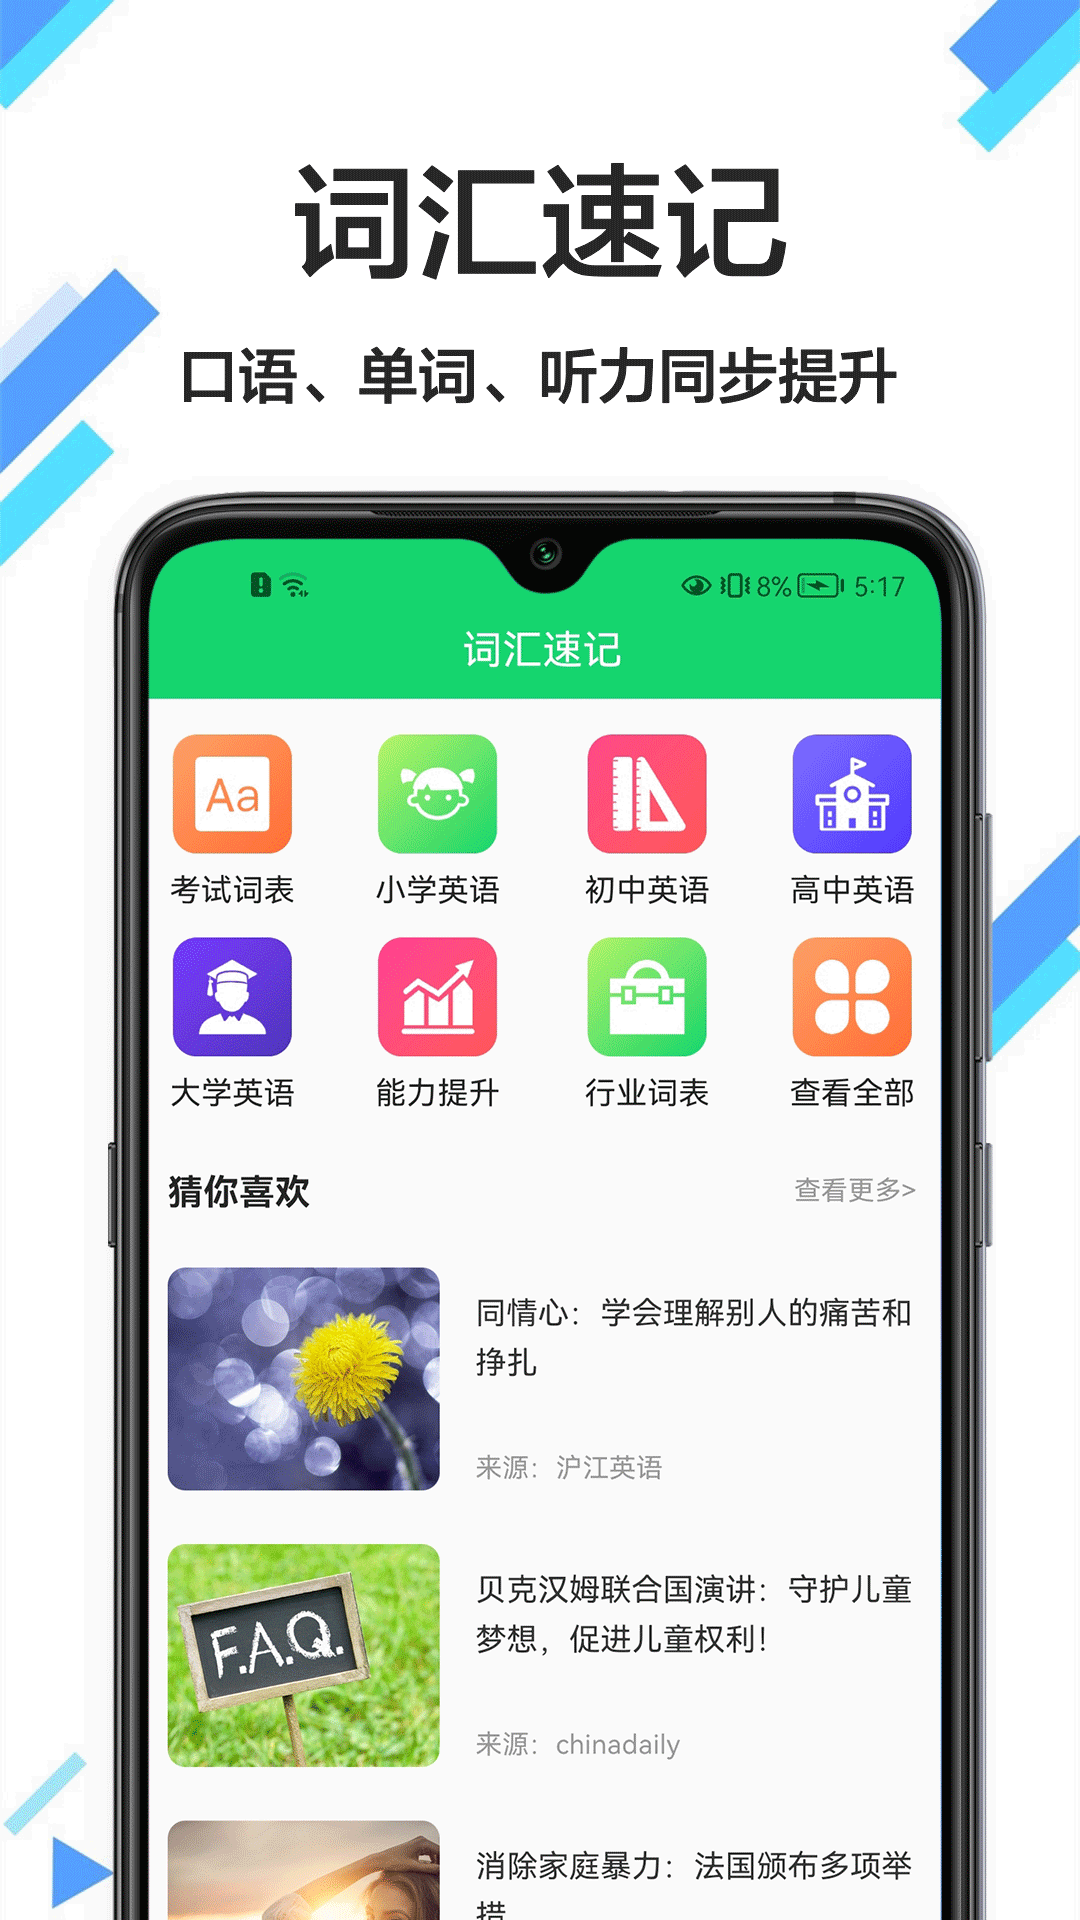 英汉词典app1.1.1